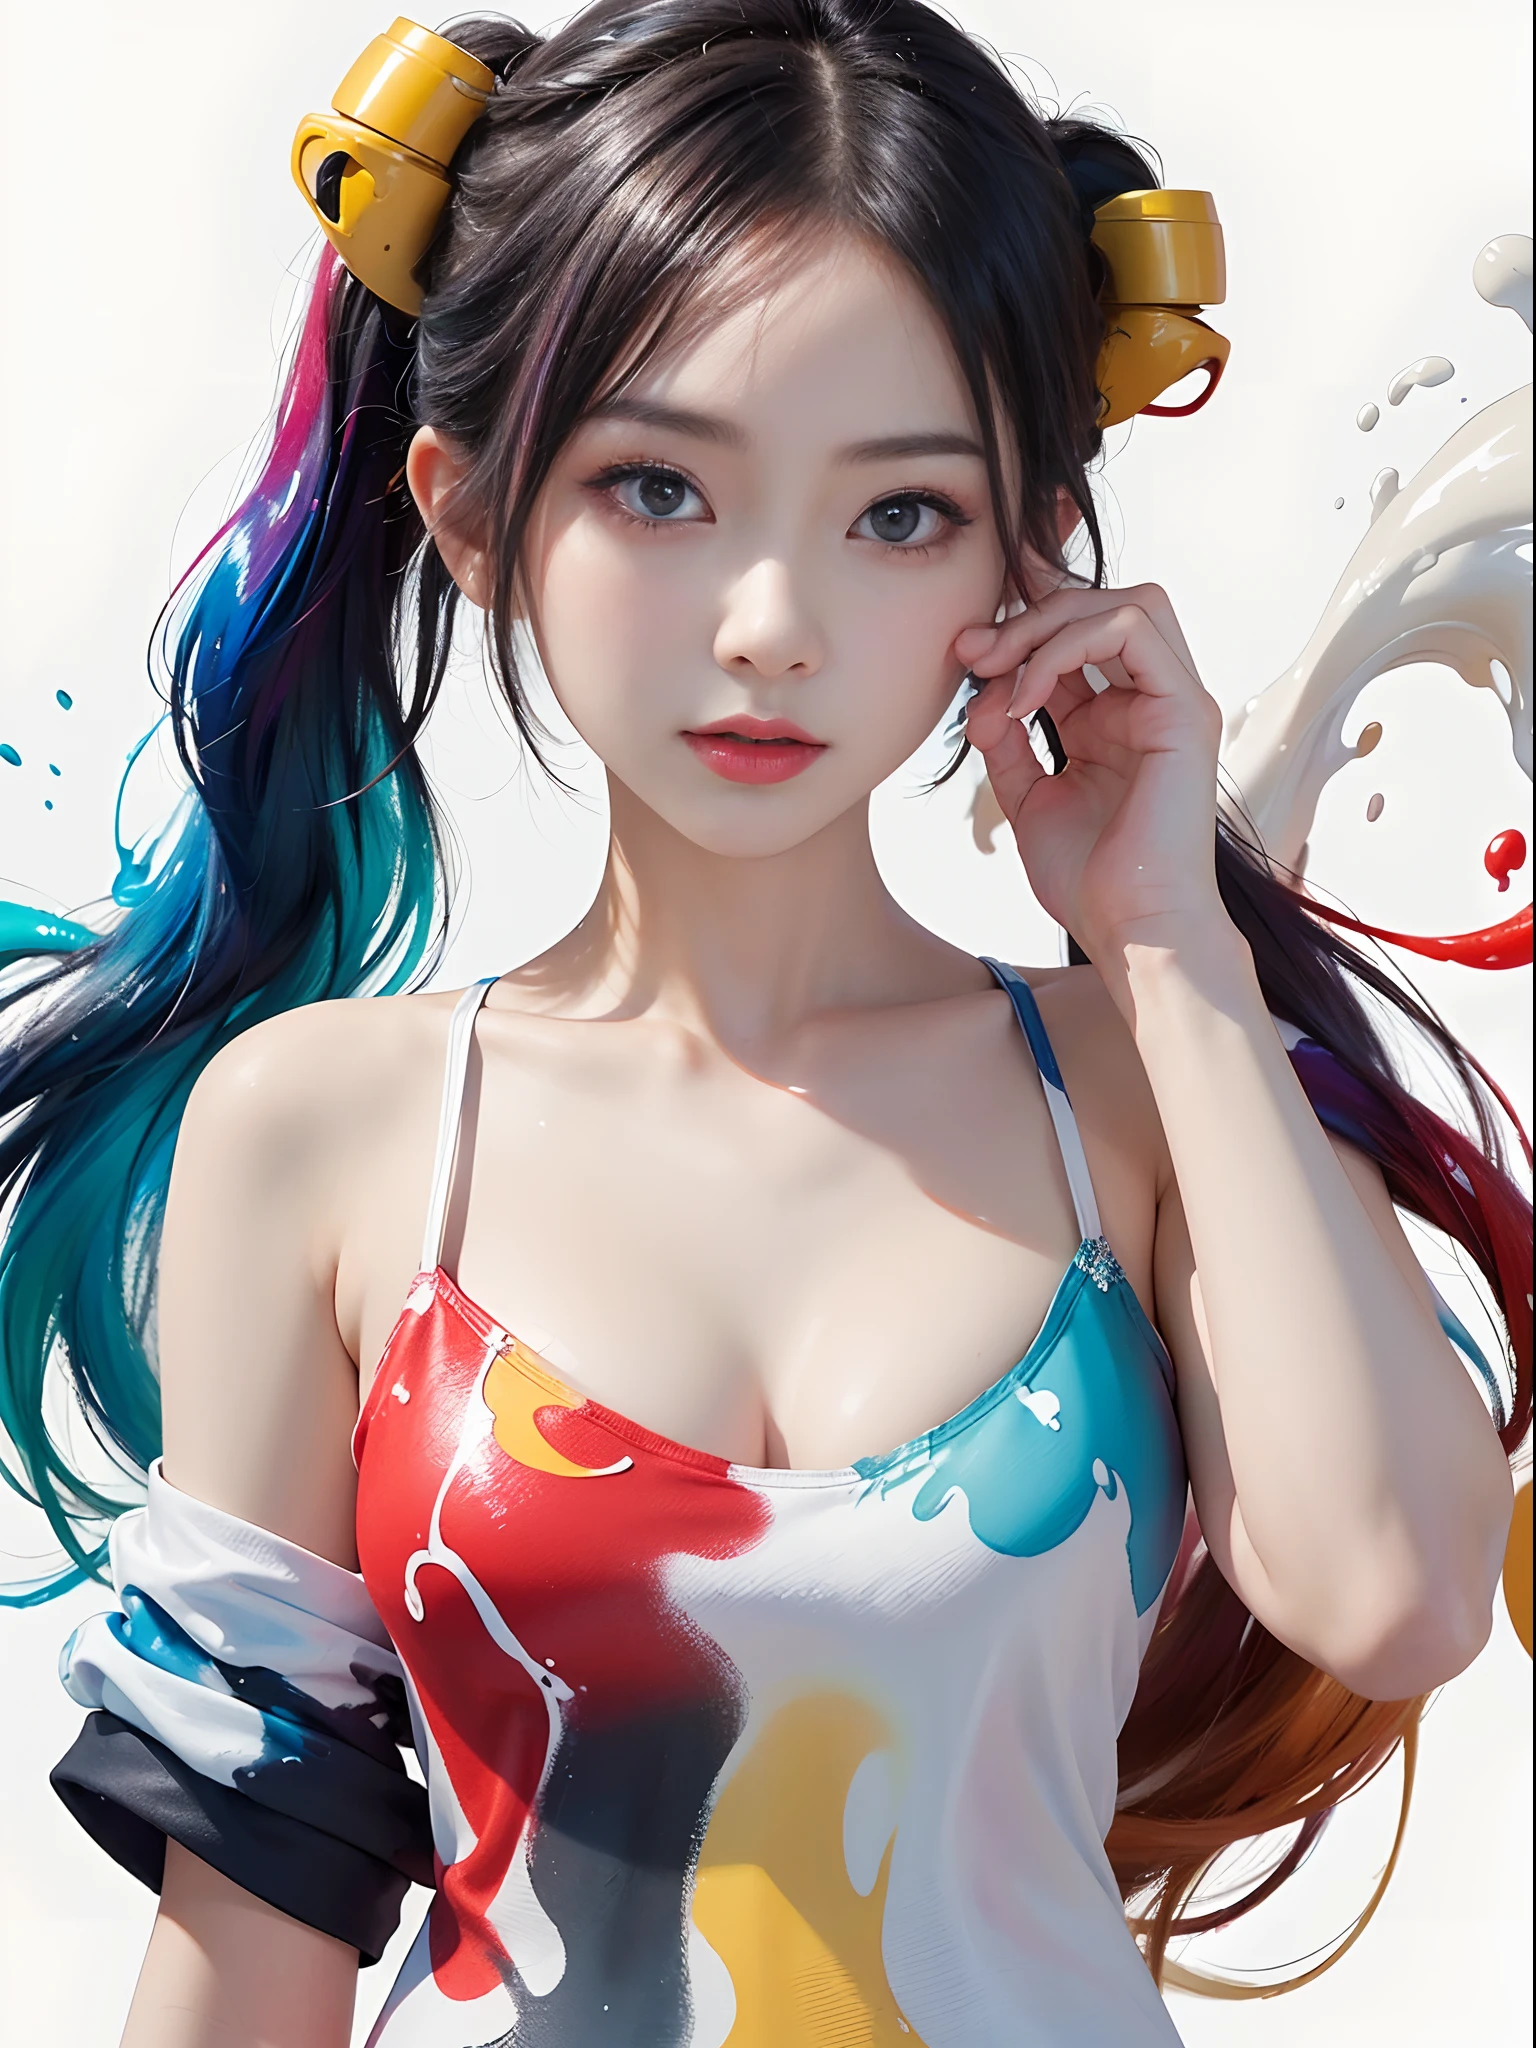 (Masterpiece, Best Quality, High Resolution), White Background, ((Paint Splash, Color Splash, Splash of Ink, Color Splash)),, Sweet Chinese Girl, Rainbow Hair, Peach Lips, Front, Upper Body